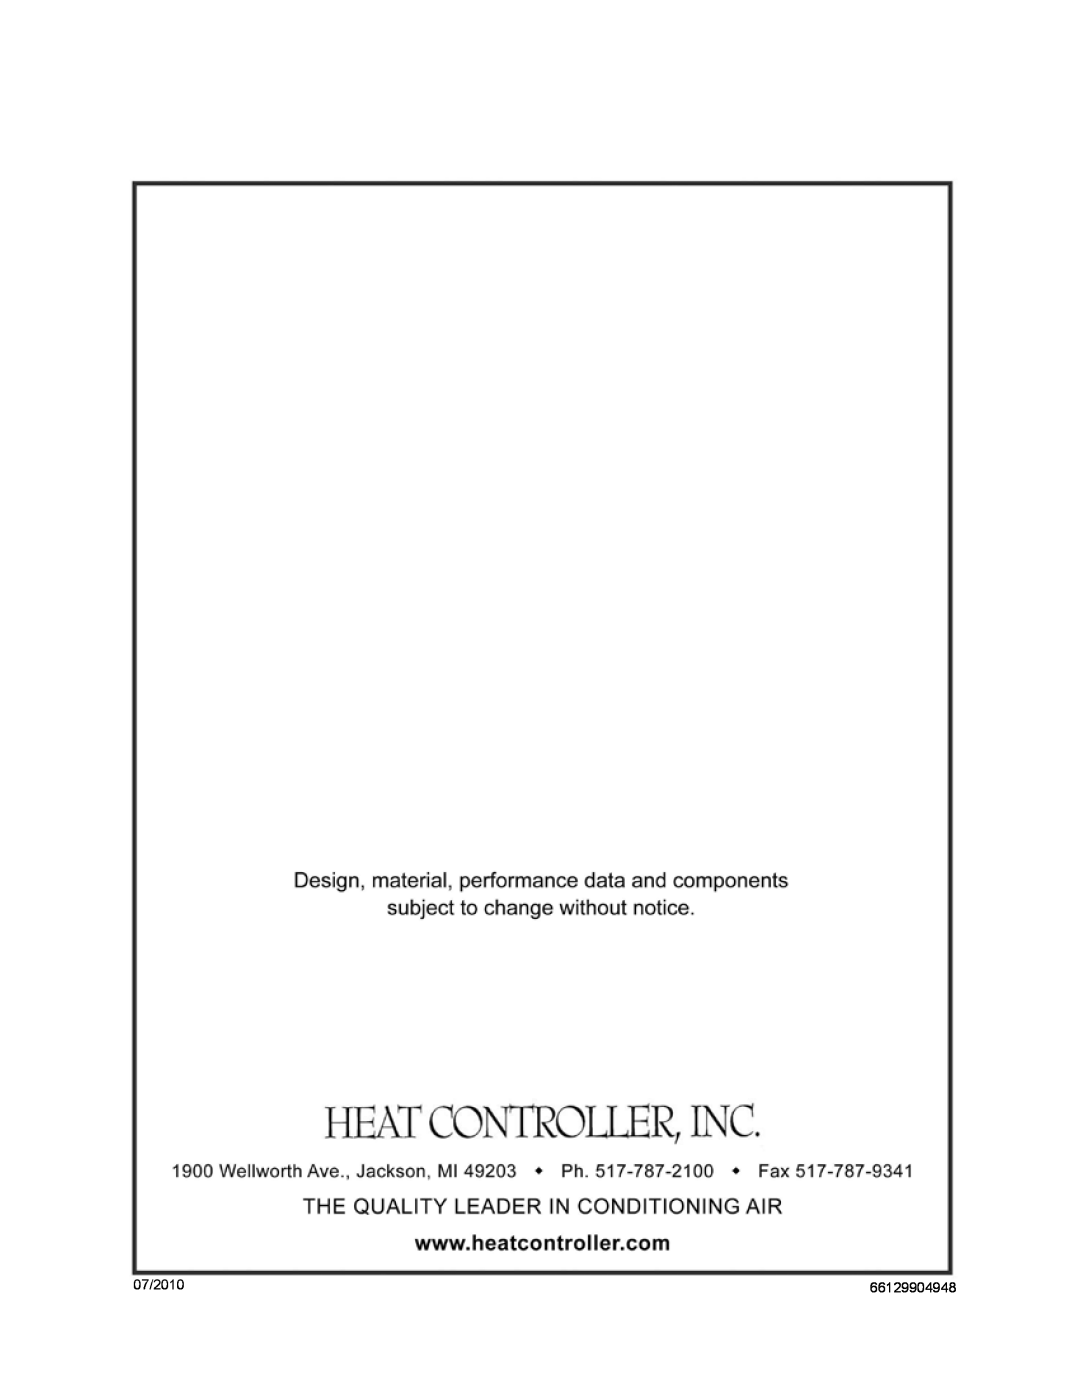 Heat Controller RAH-123G owner manual 07/2010, 66129904948 